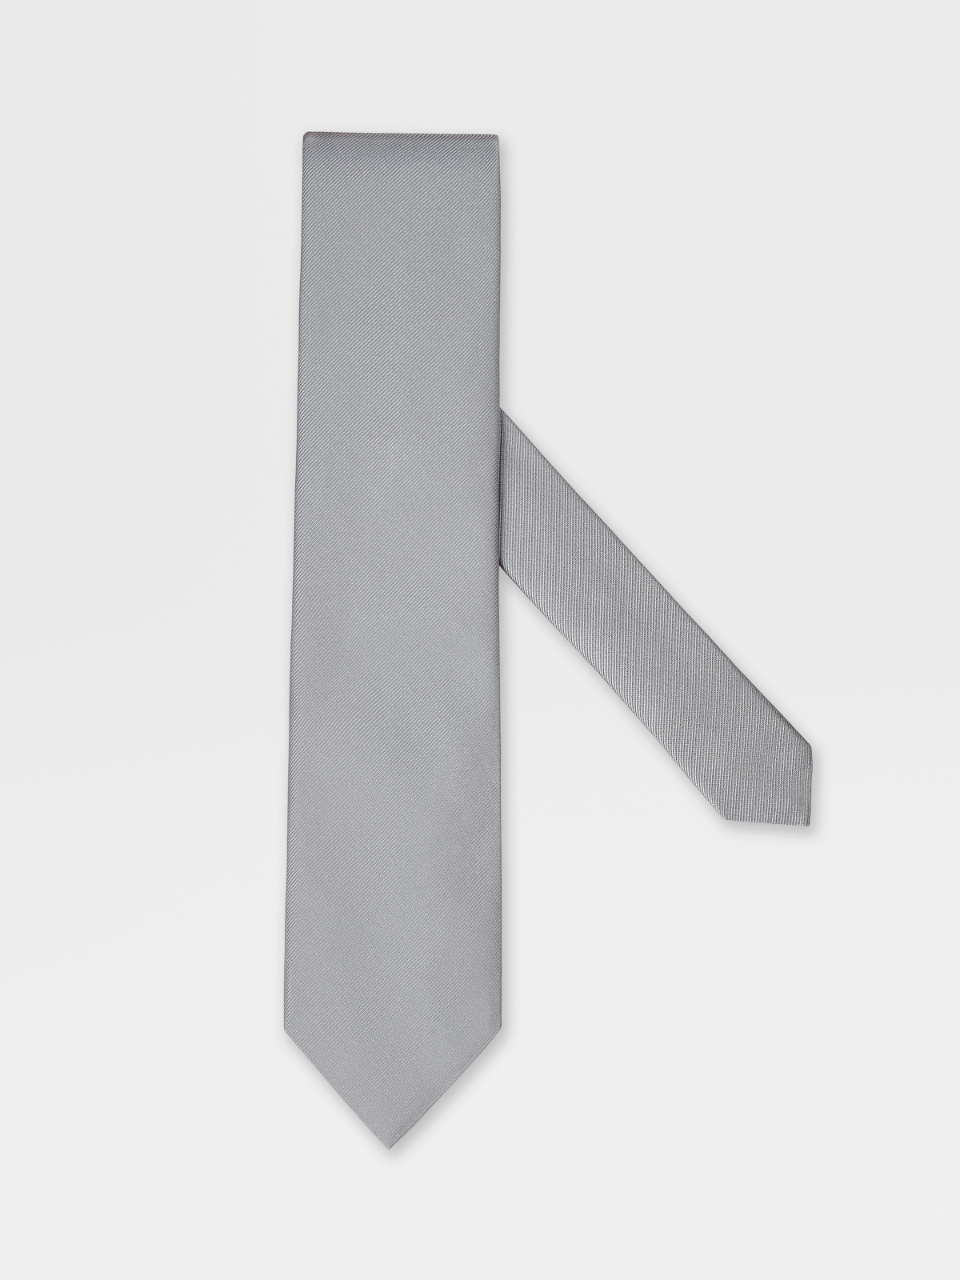 Light Grey Silk Tie